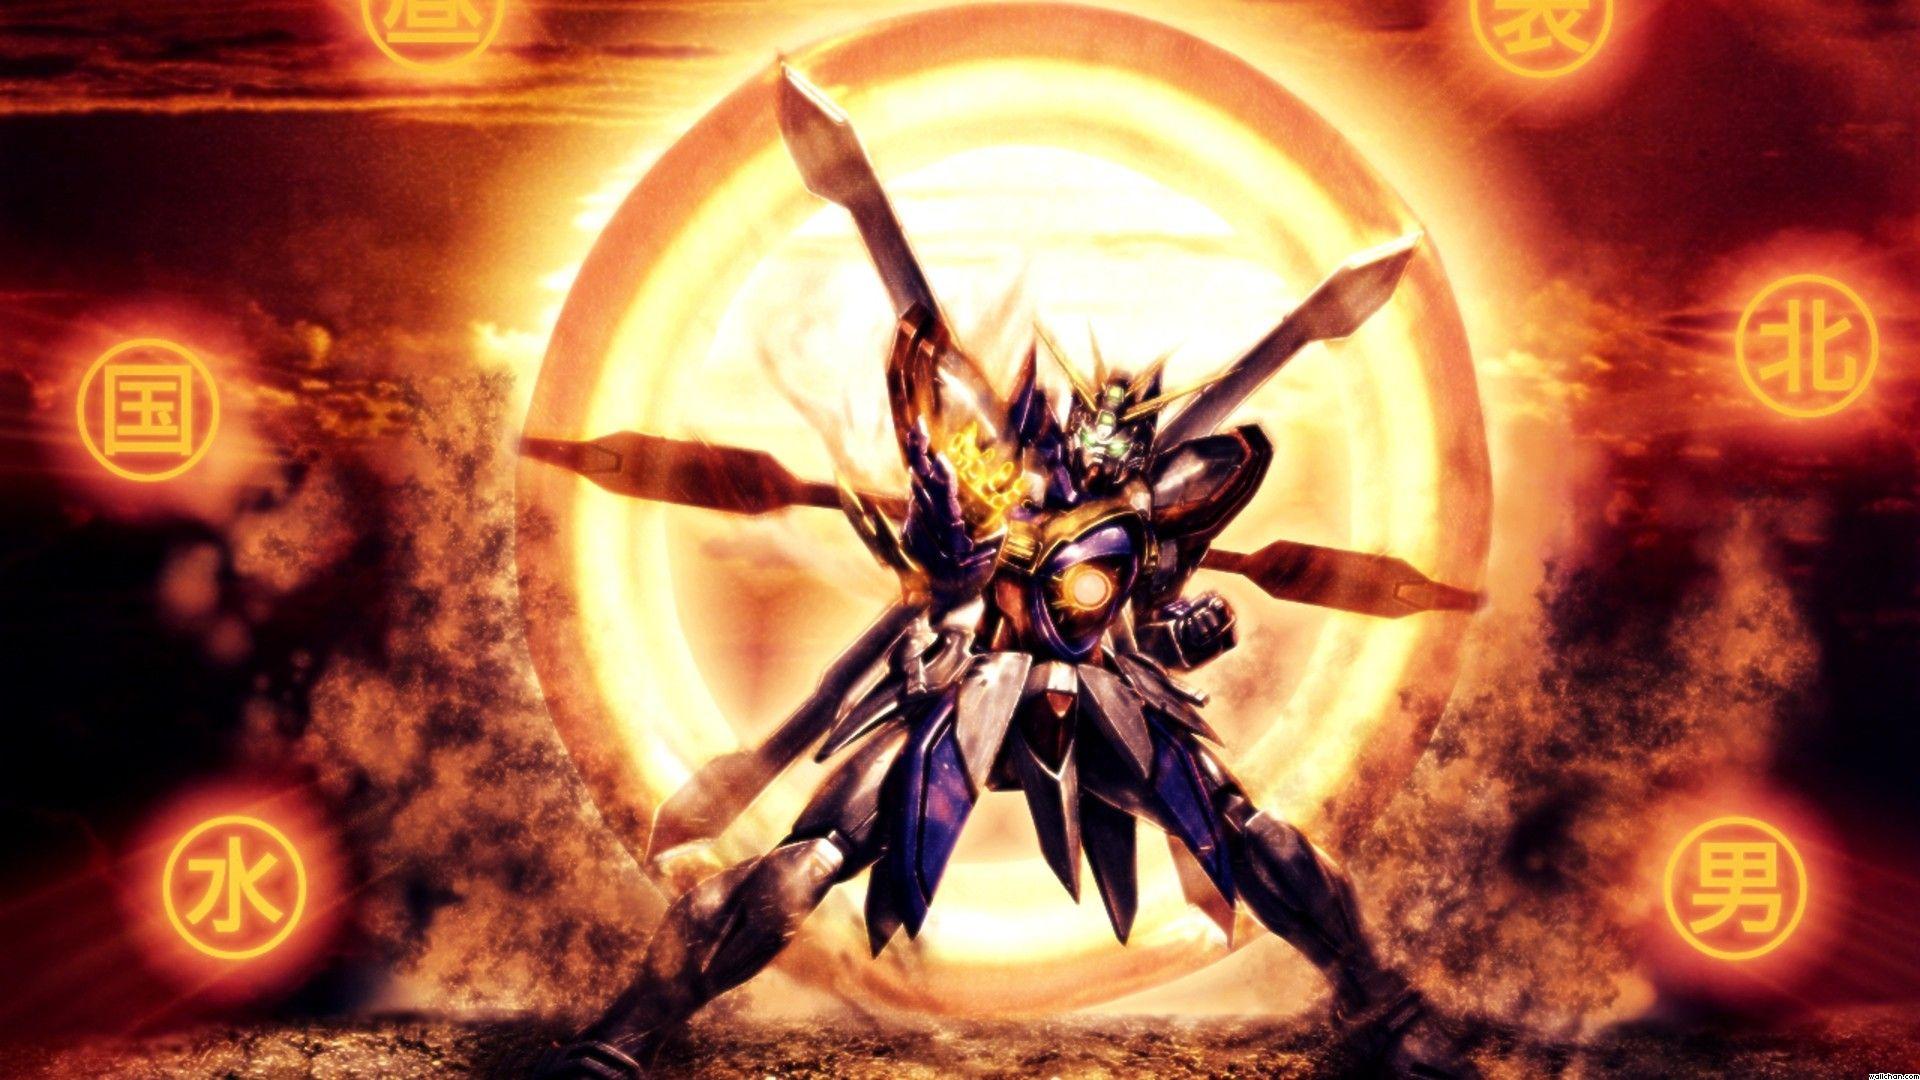 Gundam Wallpapers 1080p.